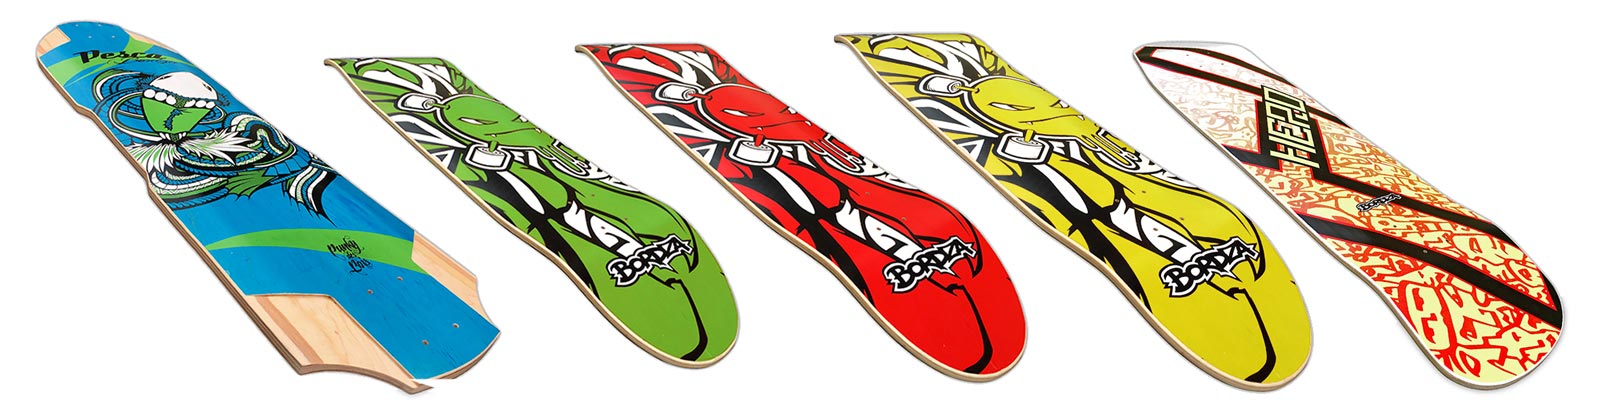 Toute la gamme des Skateboards Bordza made in France